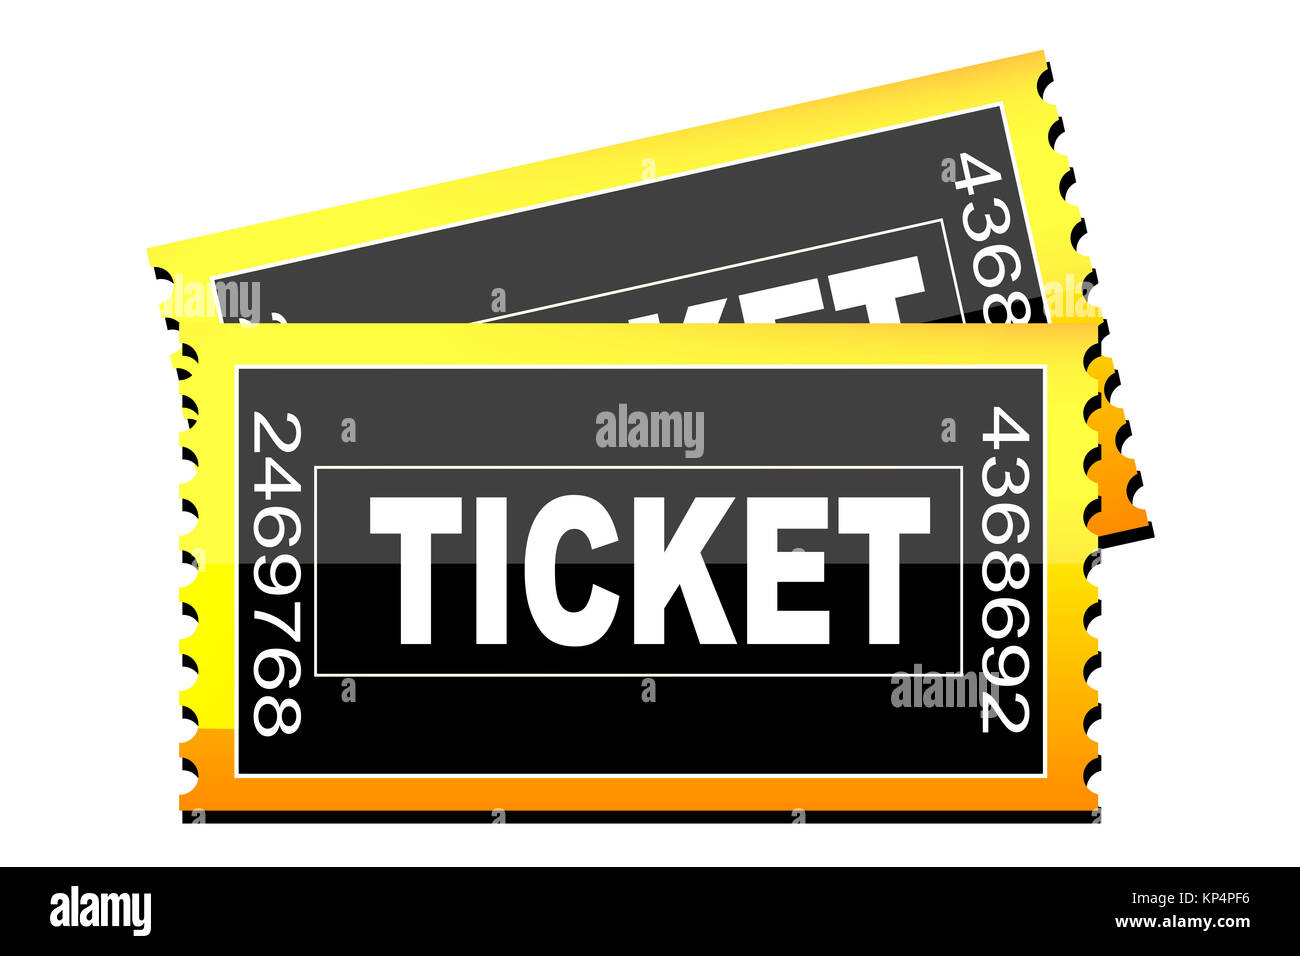 illustration of tickets icon on white background Stock Photo